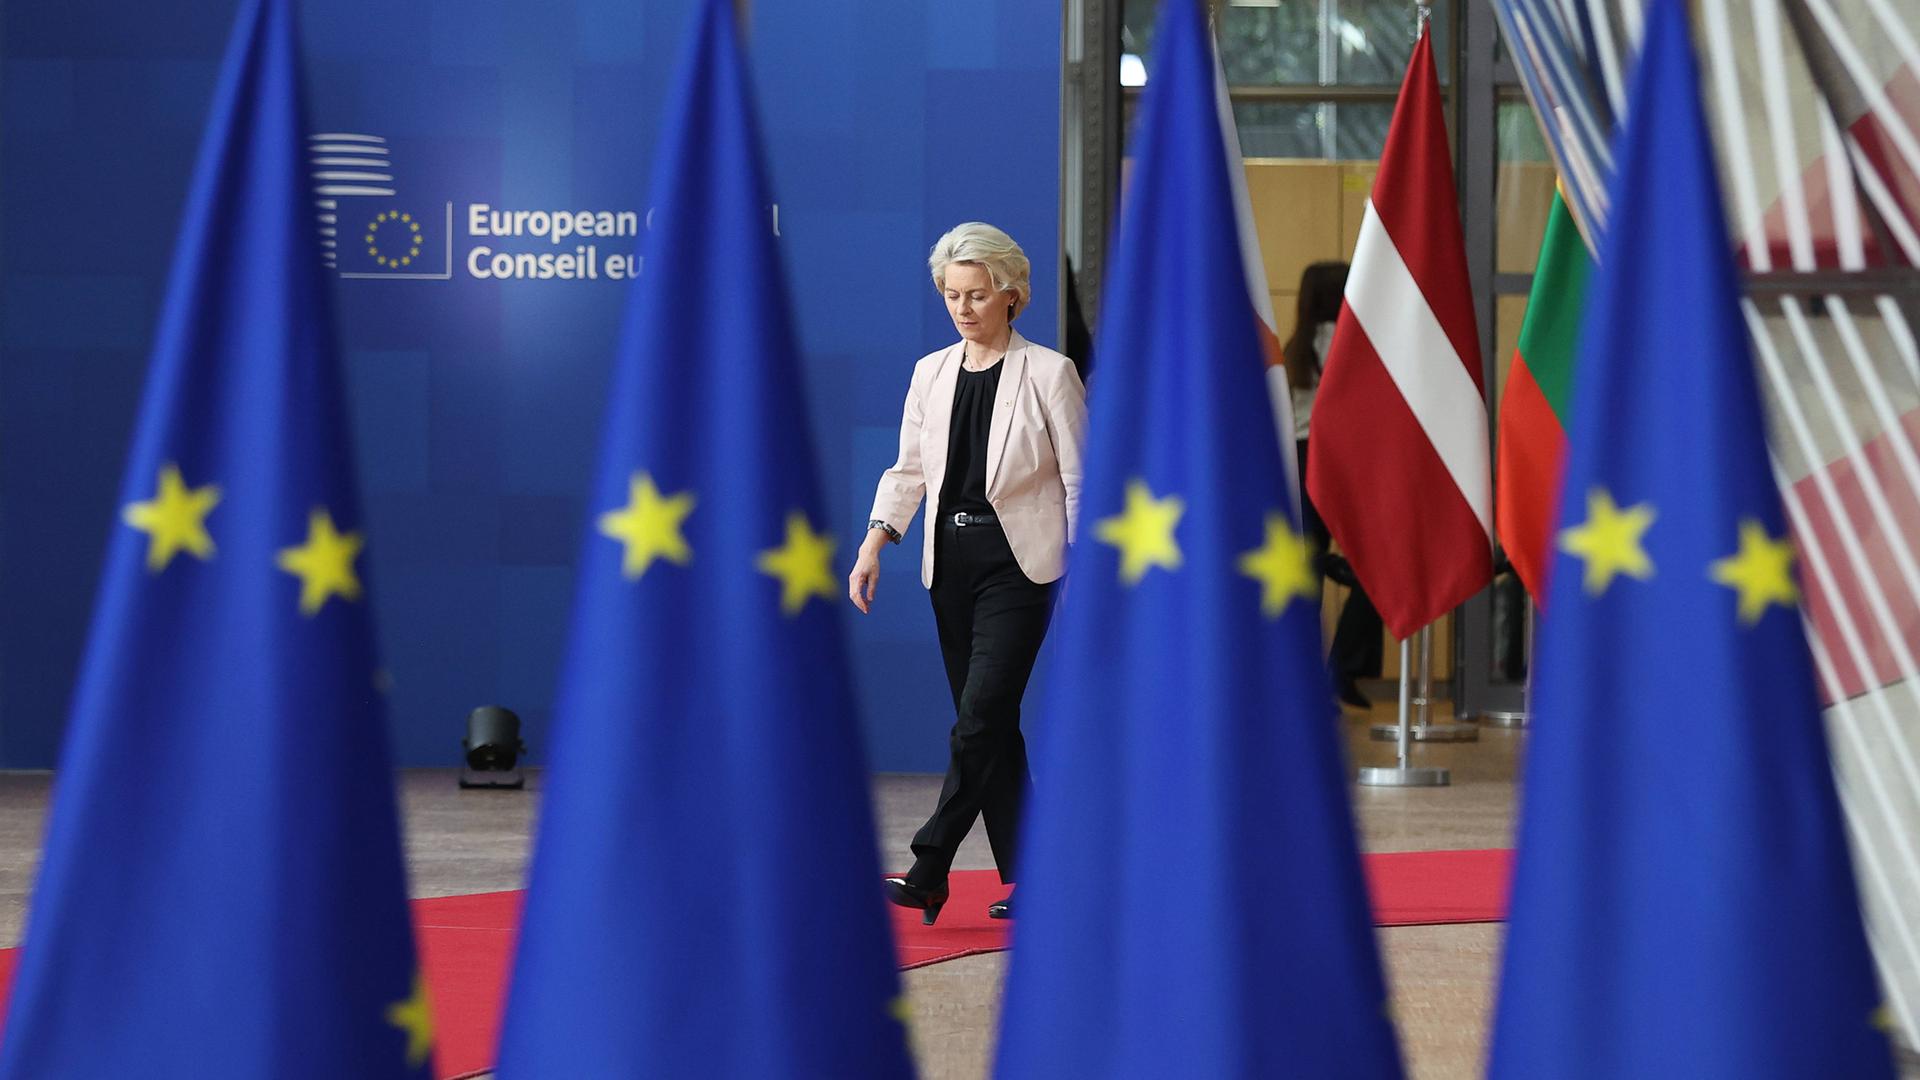 President of the European Commission Ursula von der Leyen arrives for the EU summit in Brussels.